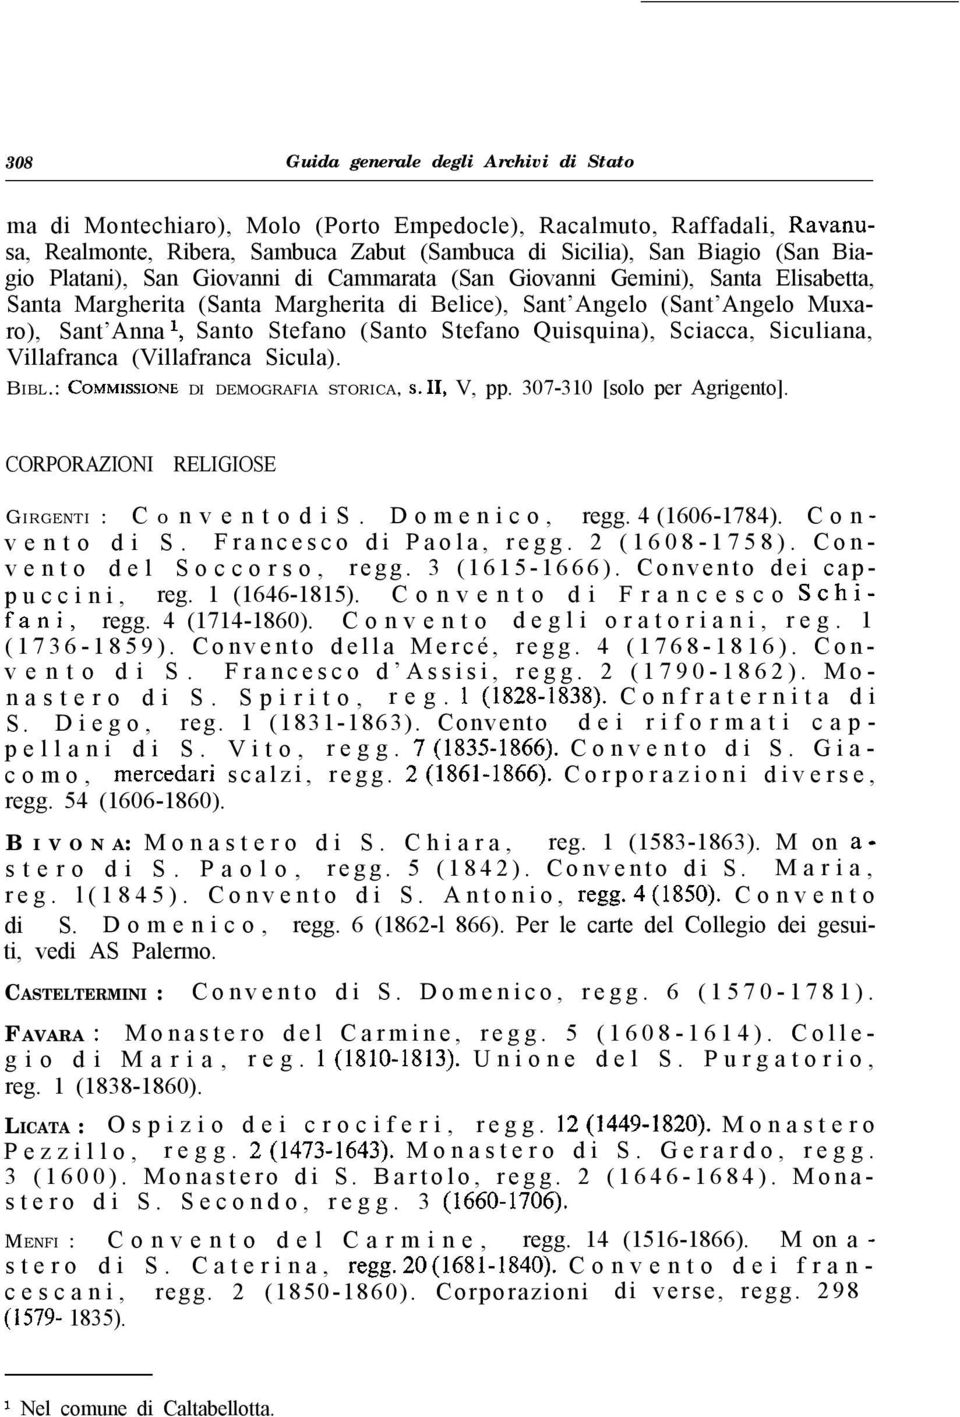 Quisquina), Sciacca, Siculiana, Villafranca (Villafranca Sicula). BIBL.: COMMISSIONE DI DEMOGRAFIA STORICA, s. 11, V, pp. 307-310 [solo per Agrigento].